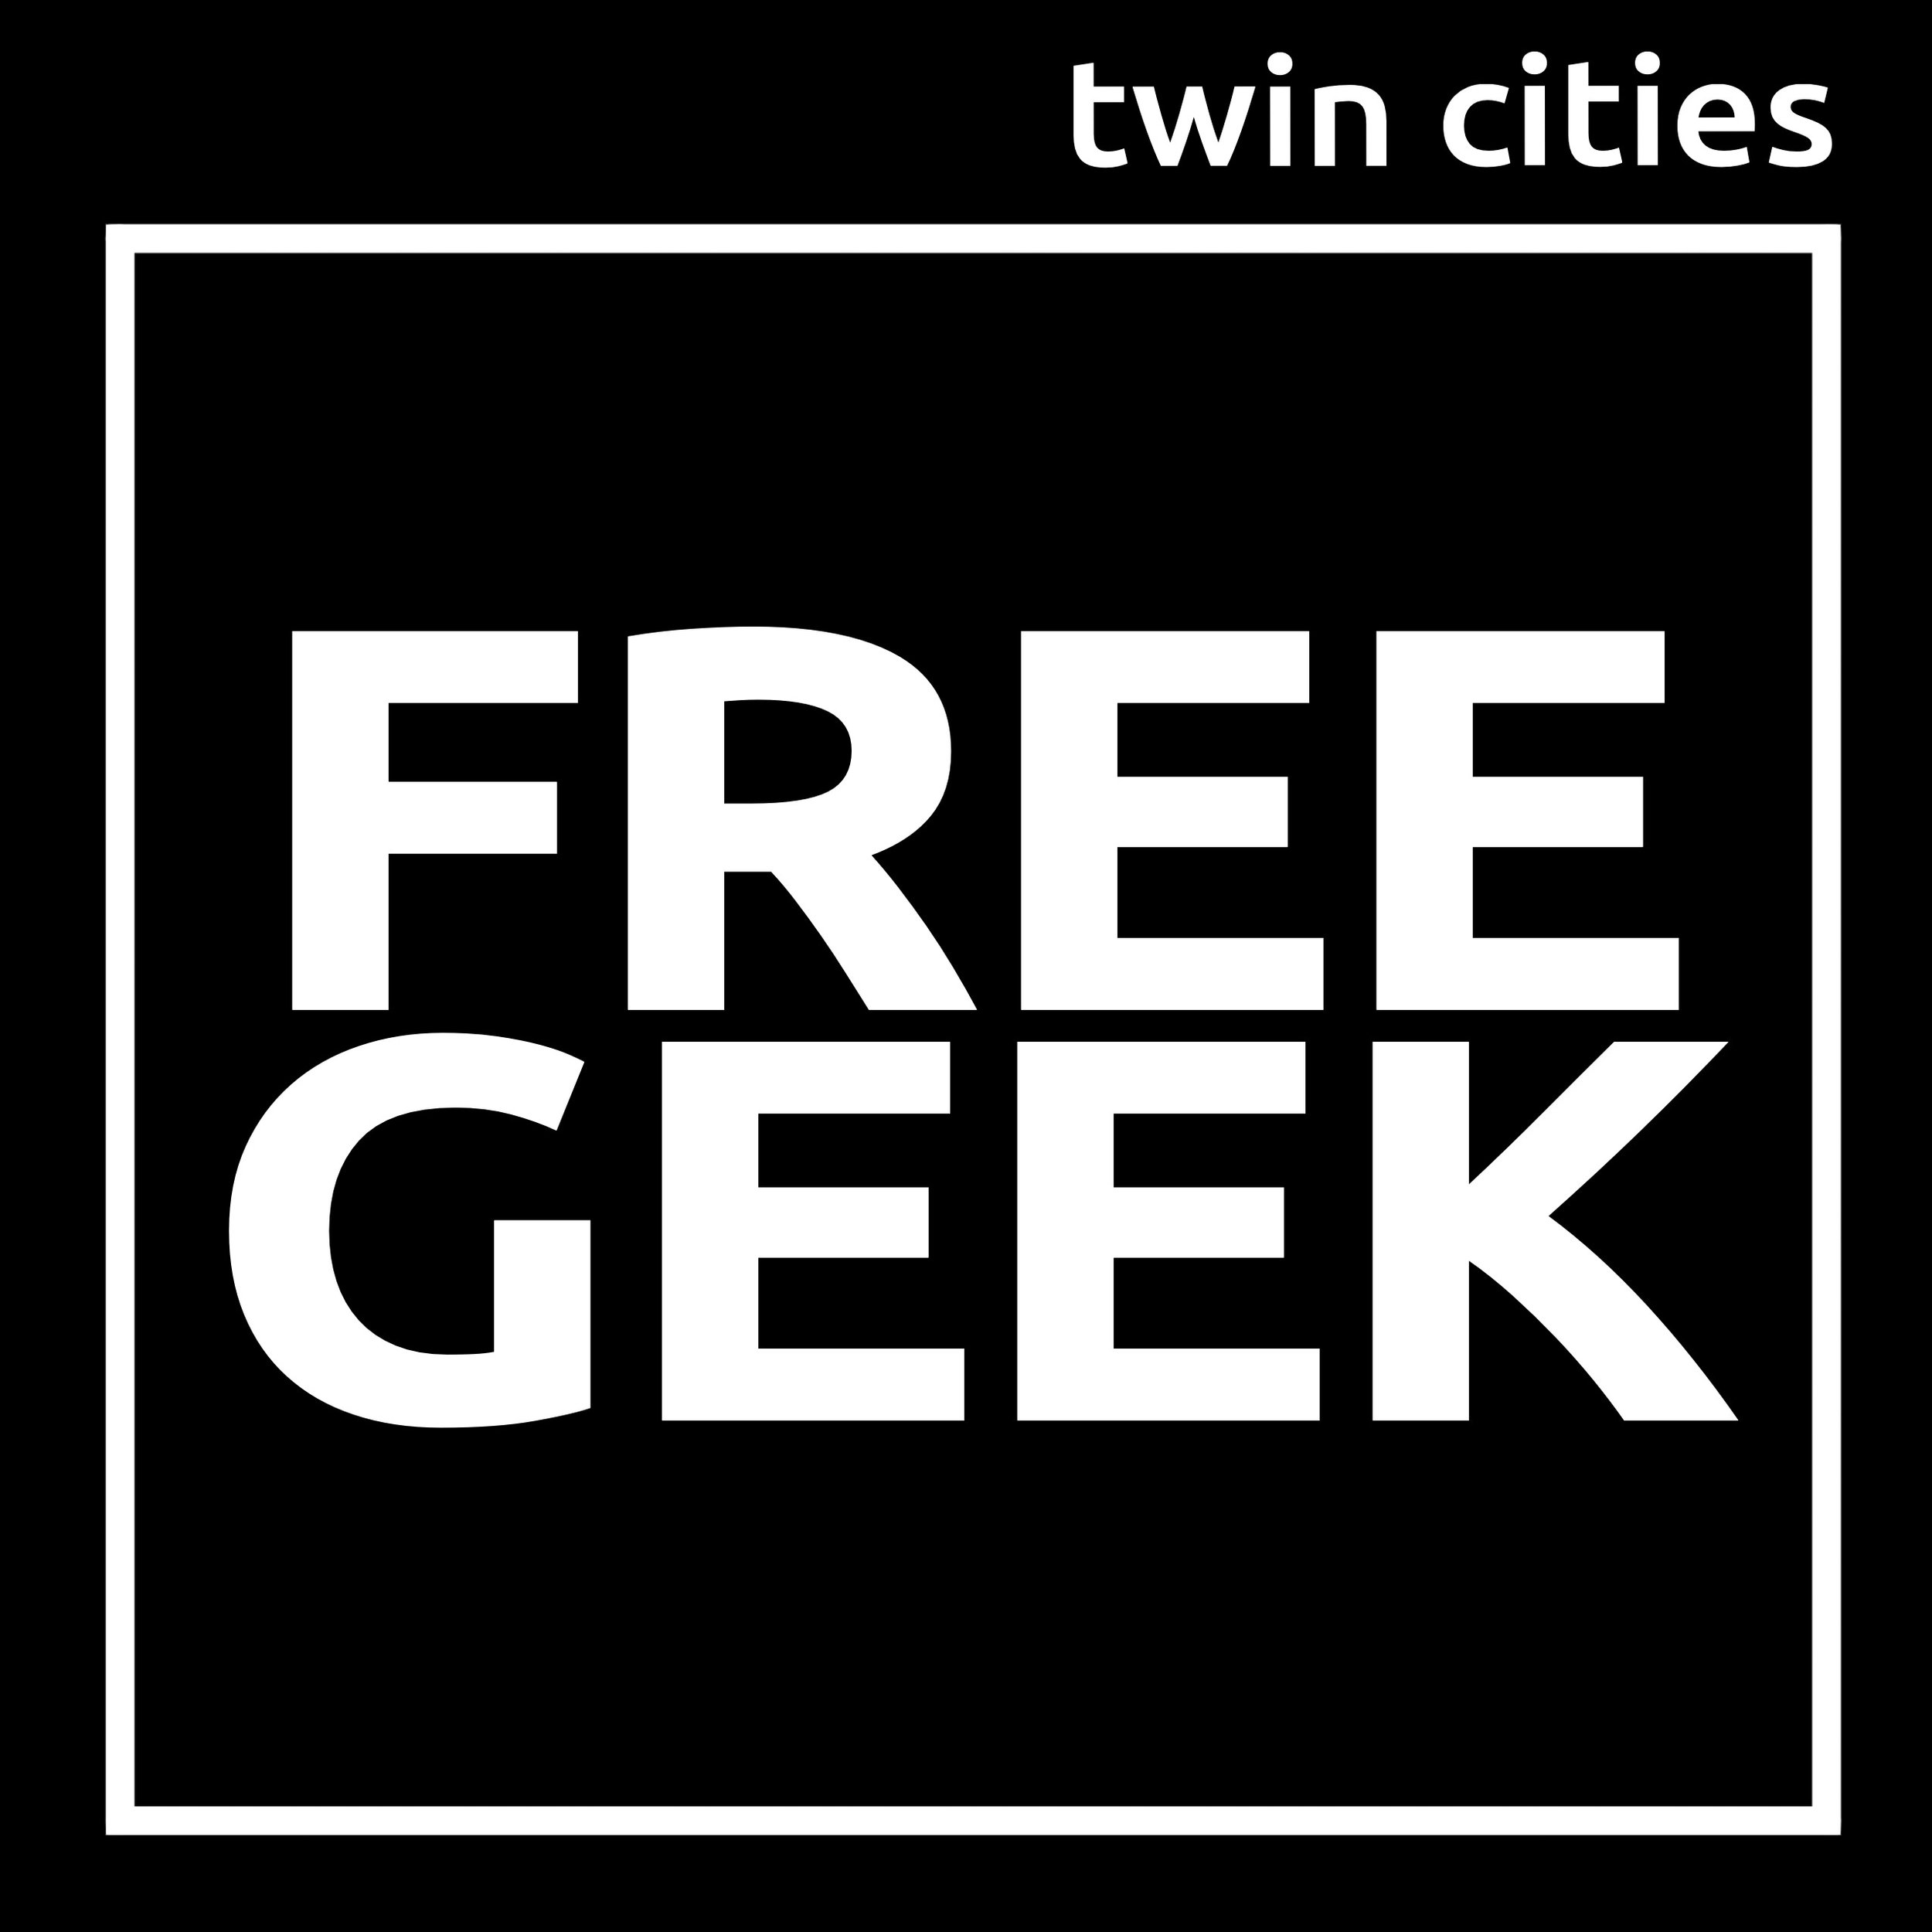 Retro Computer cases (randomly selected) — Free Geek Twin Cities